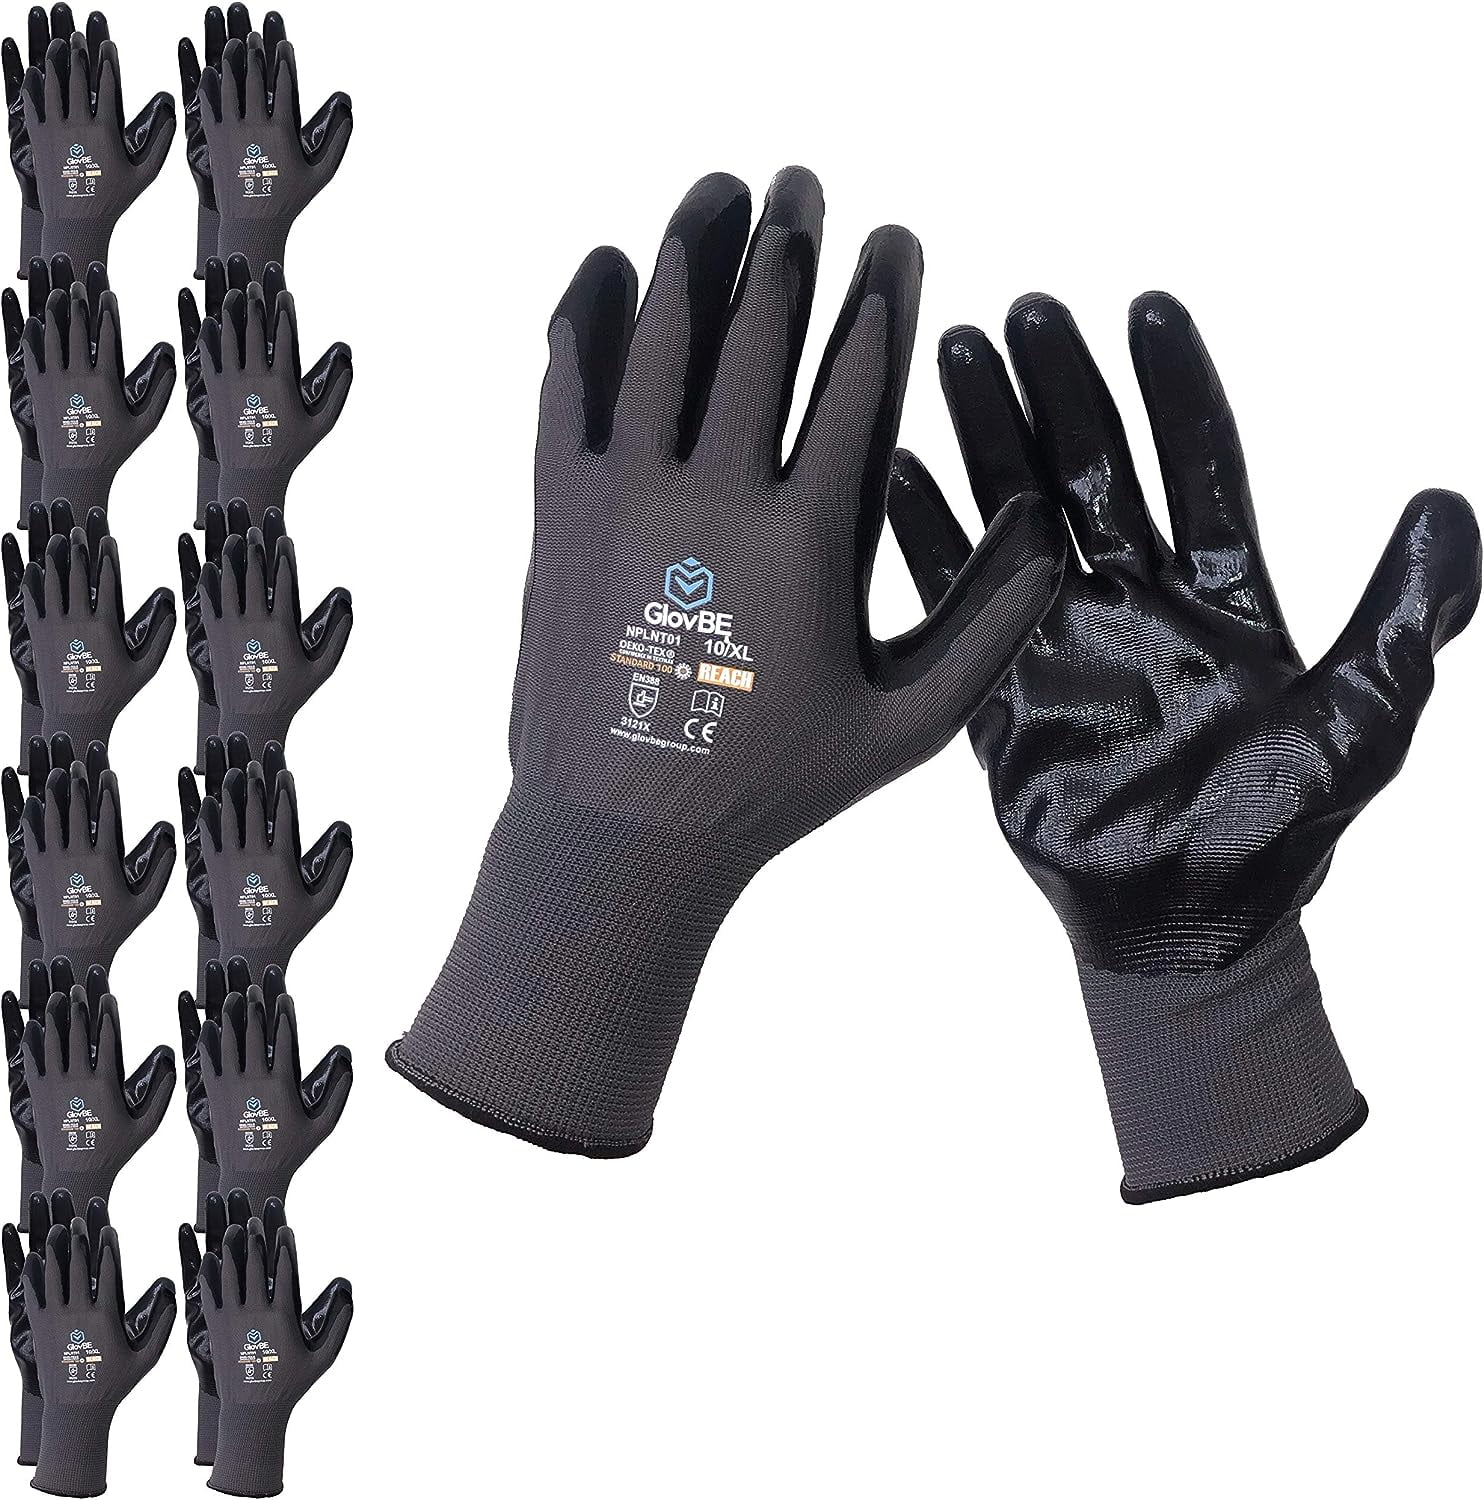 12 Pairs Mechanic Work Gloves, Oil  Gas Resistant Nitrile Coating, Grey  (Medium)